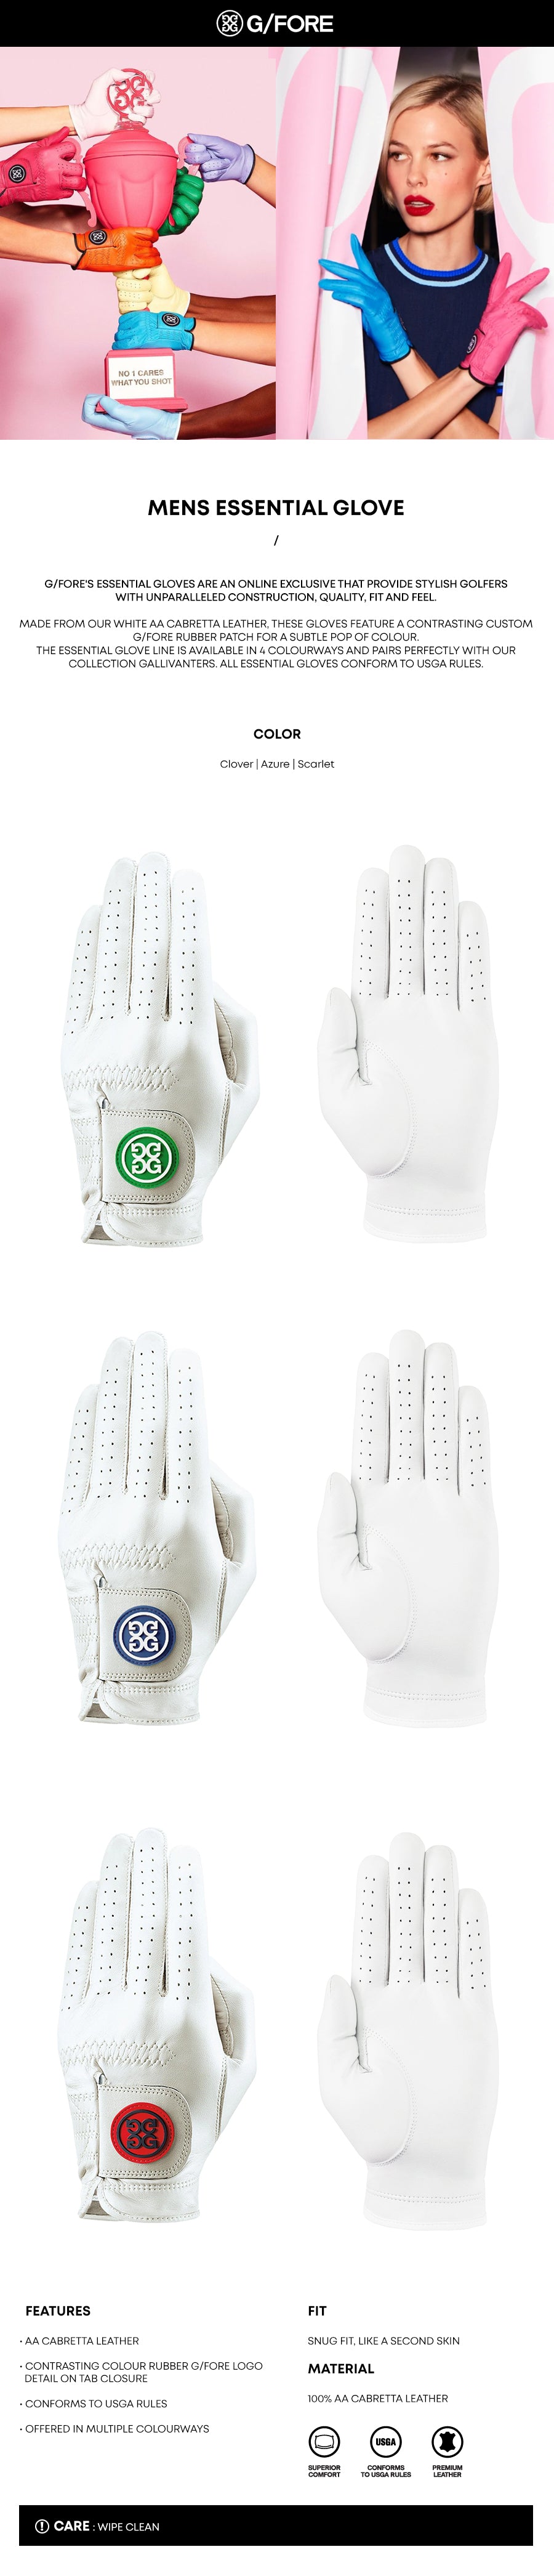 gfore-mens-essential-glove